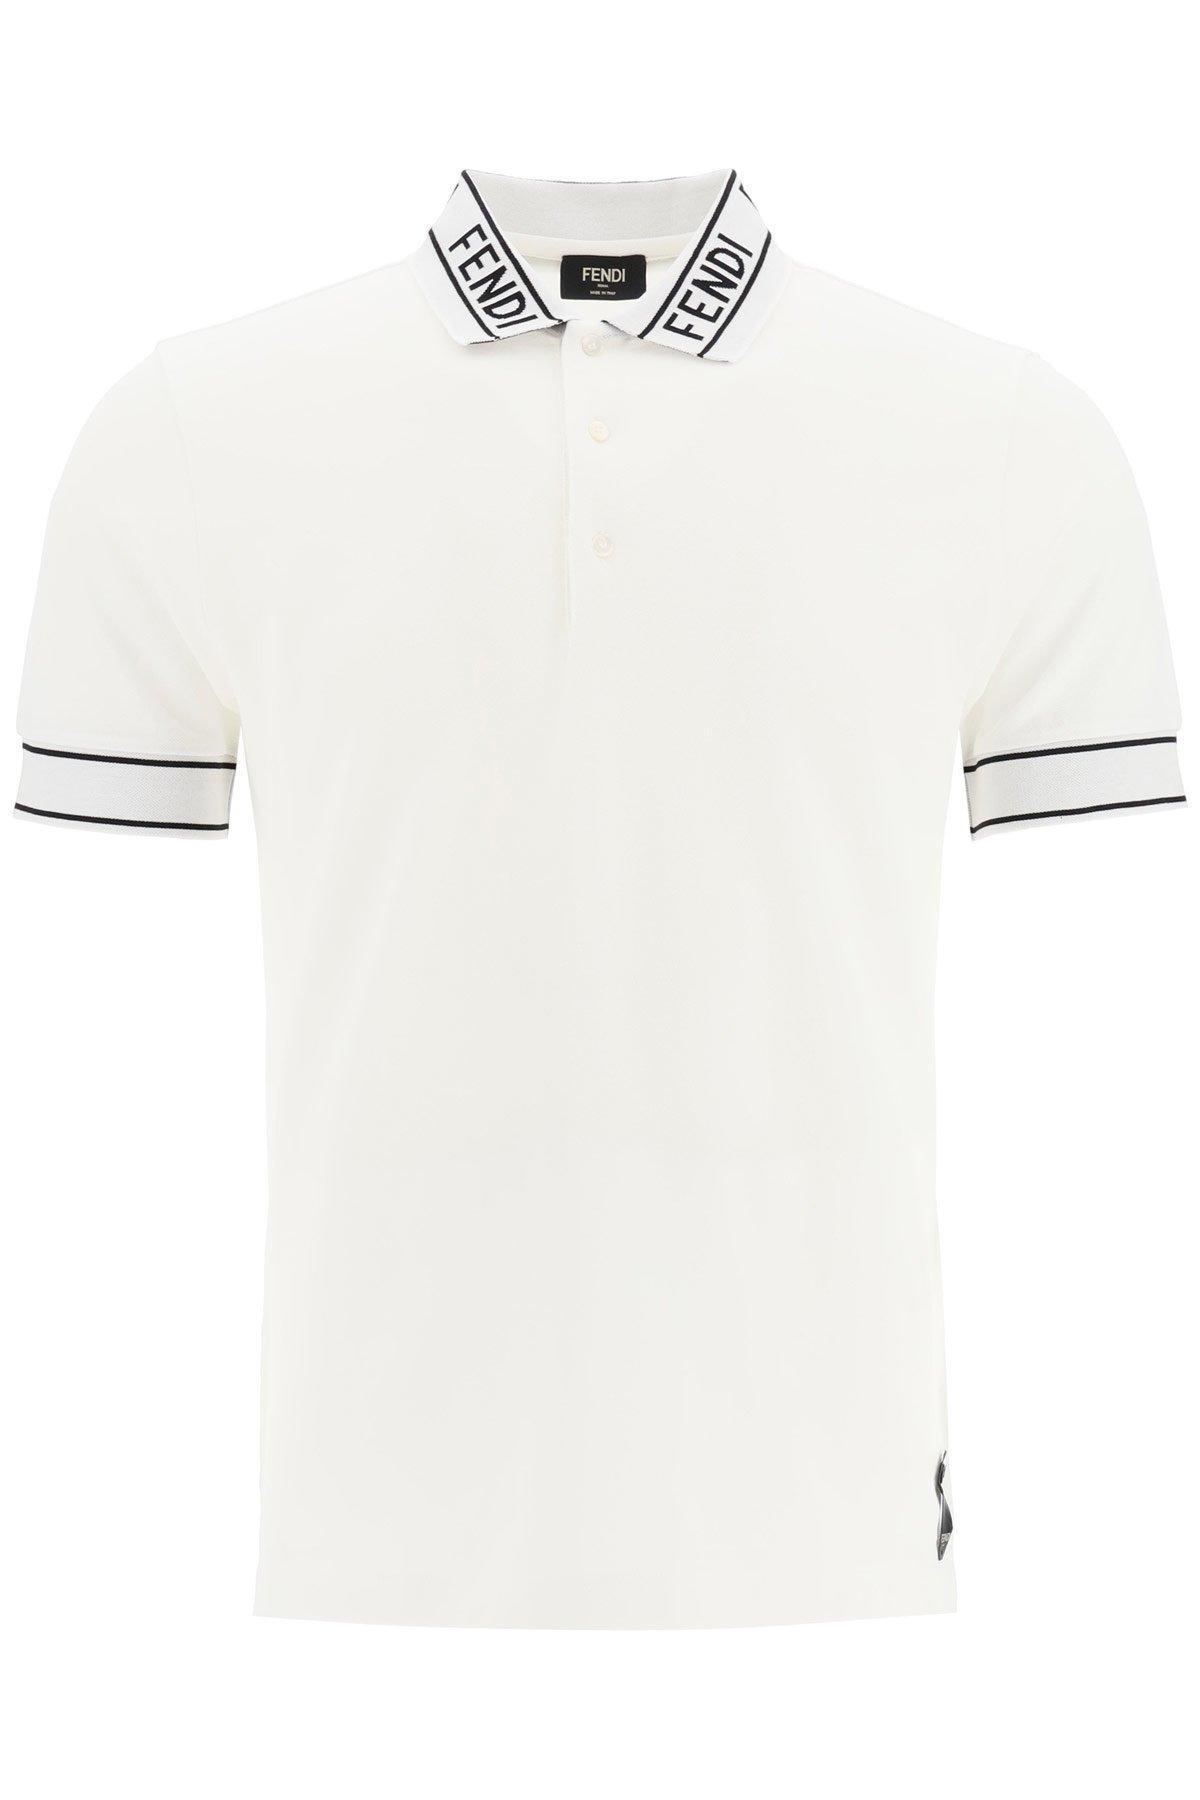 Fendi Cotton Logo Collar Polo Shirt in White for Men - Lyst